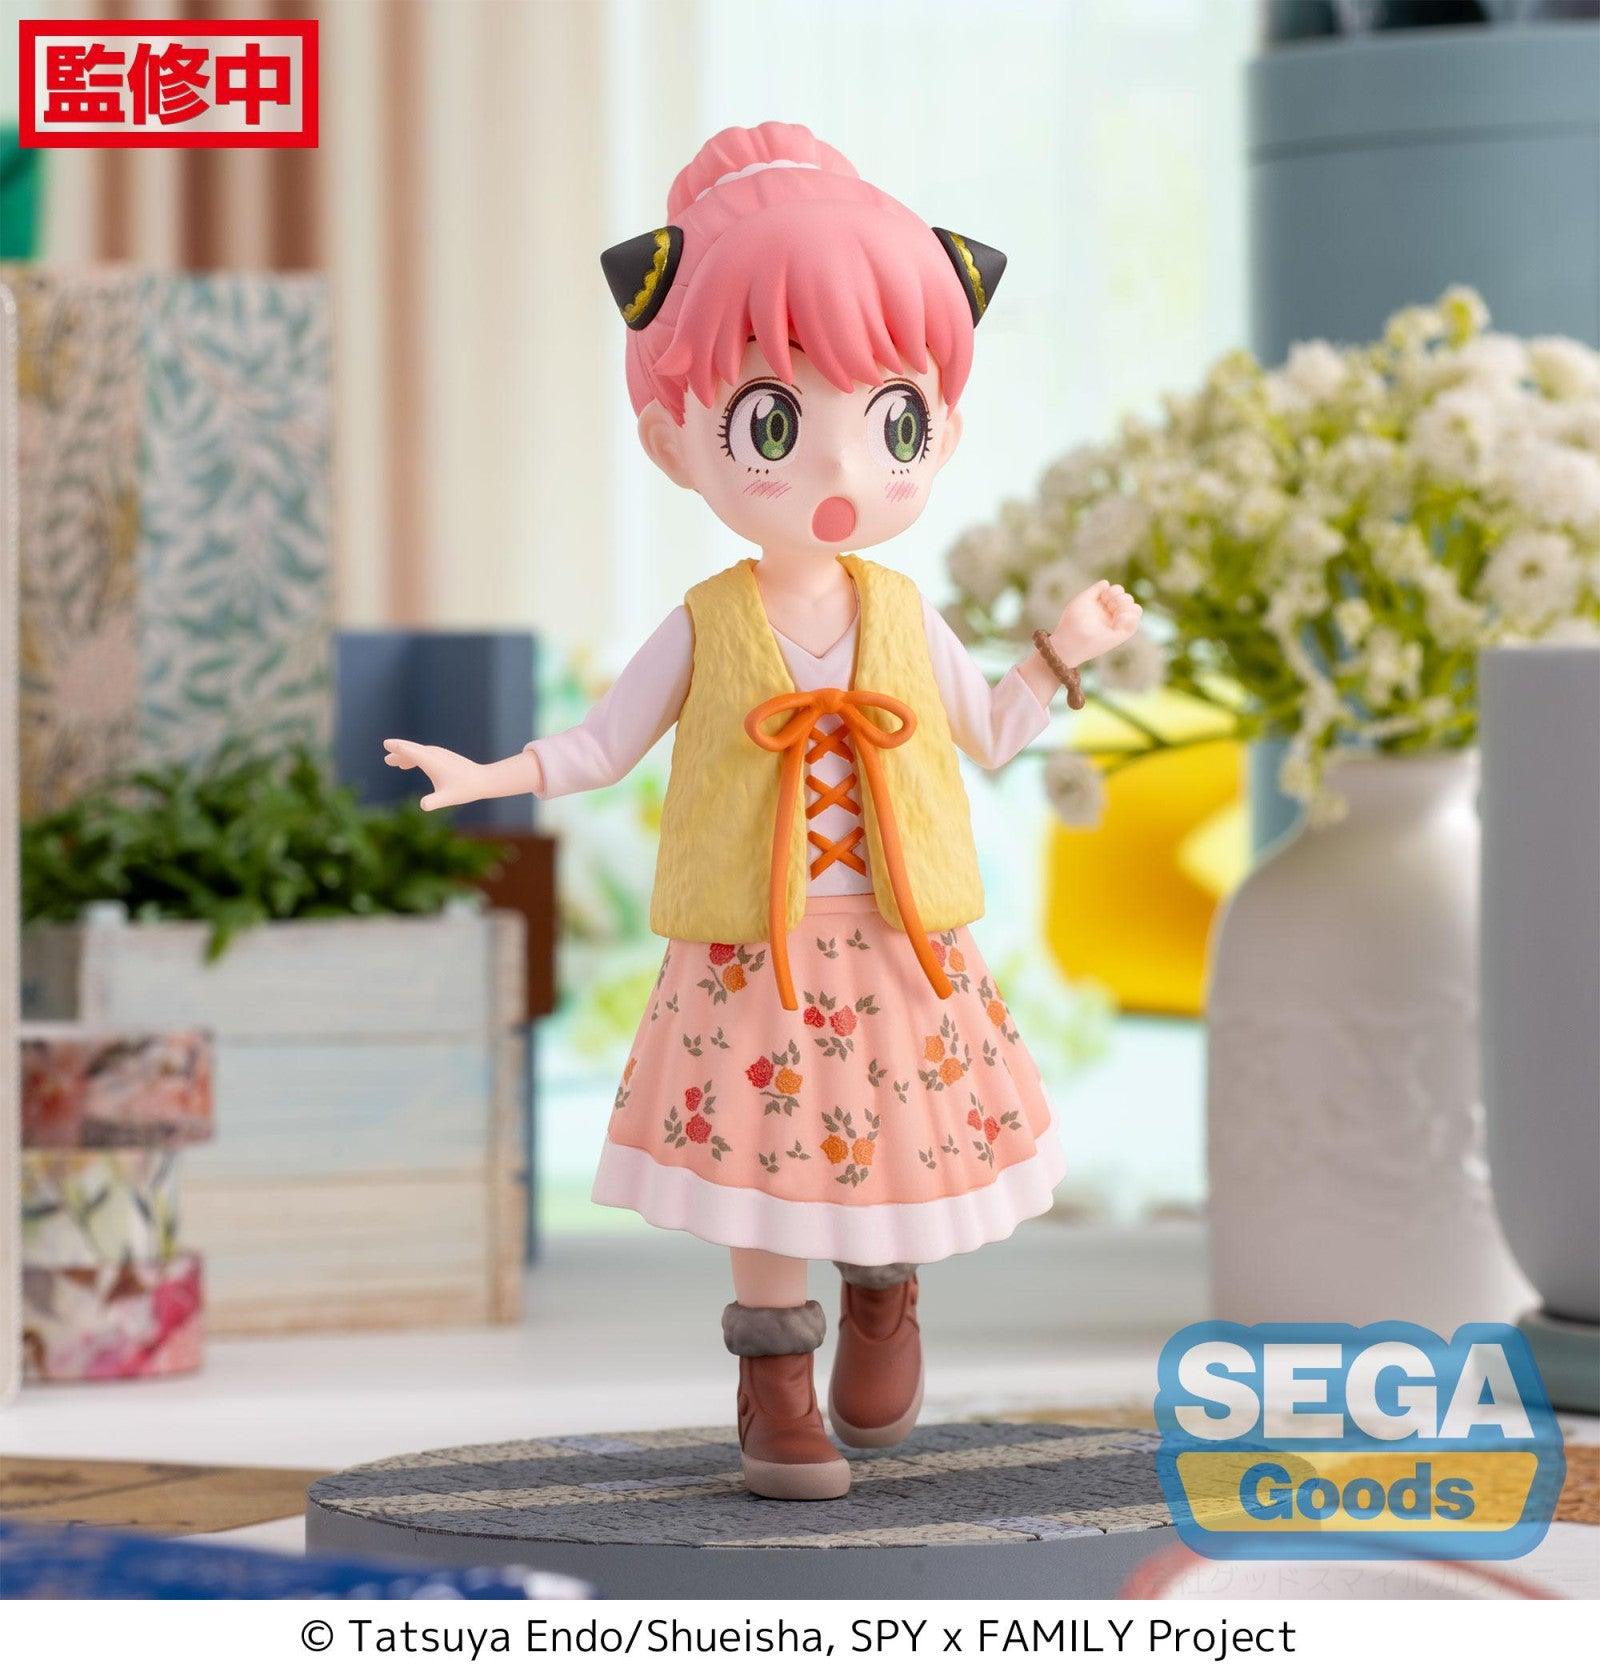 VR-114085 Spy x Family Luminasta TV Anime Anya Forger Stylish Look Volume 3 - Good Smile Company - Titan Pop Culture